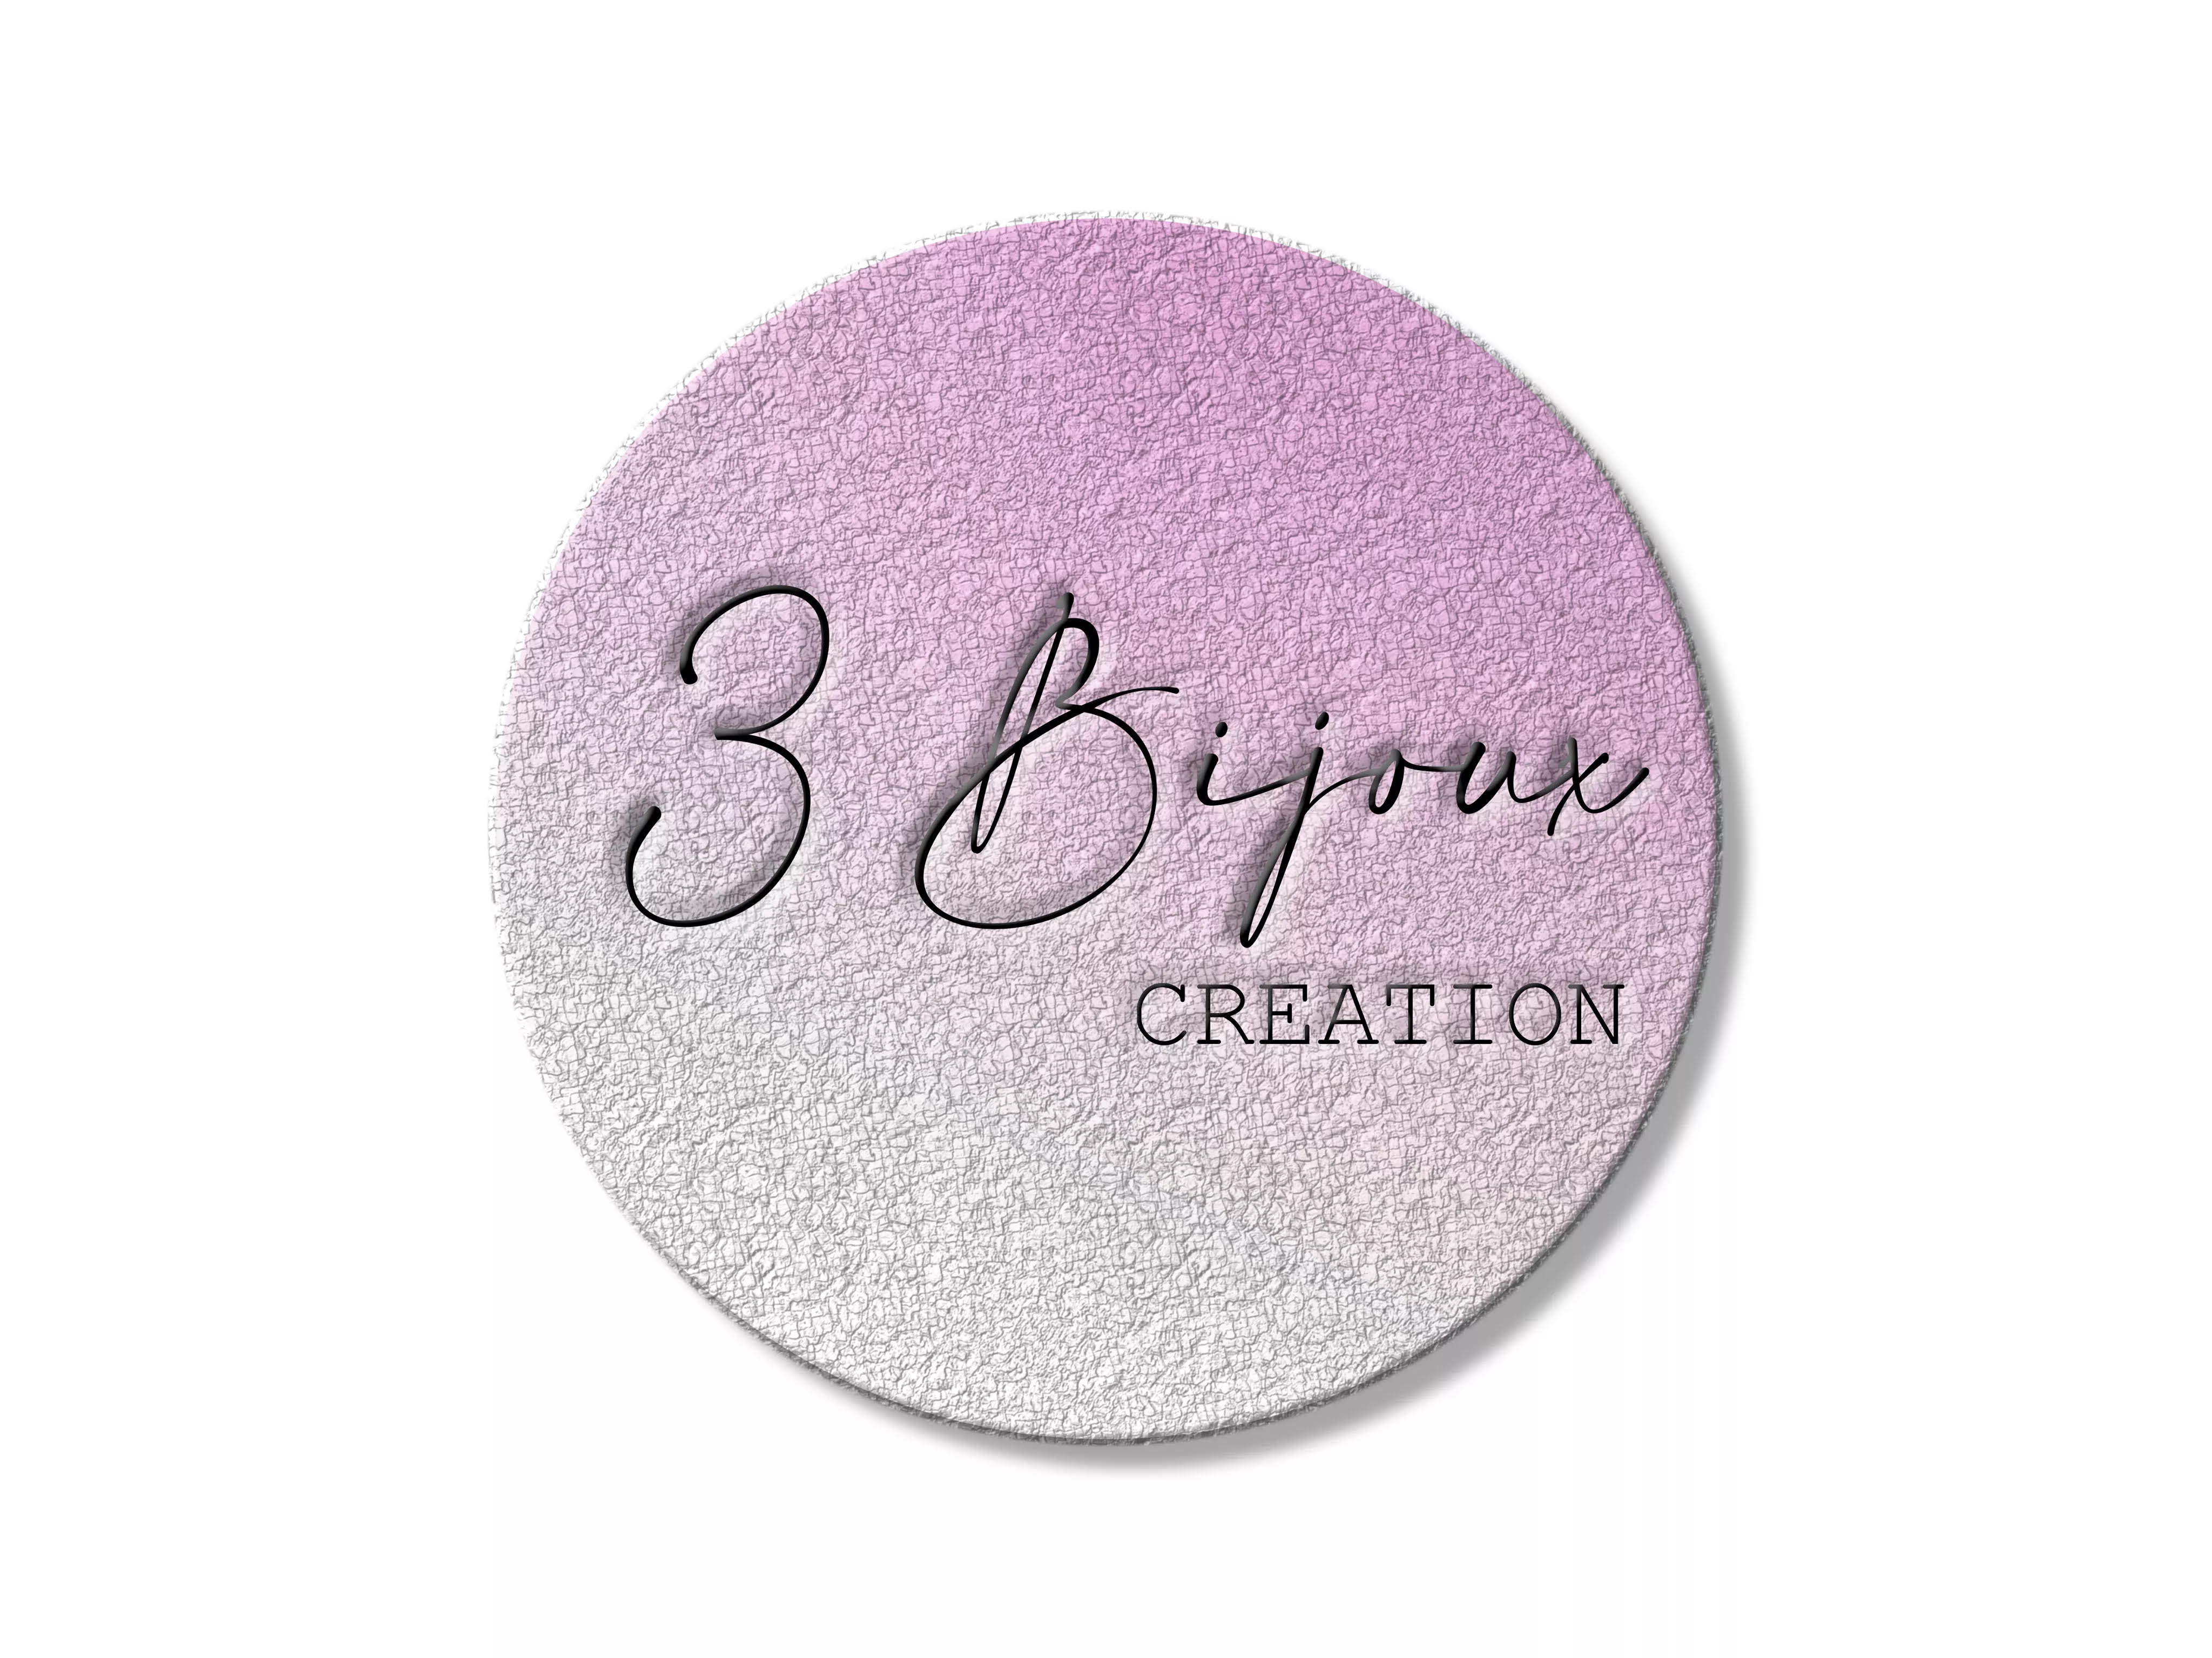 3 BIJOUX CREATIONS logo.jpg